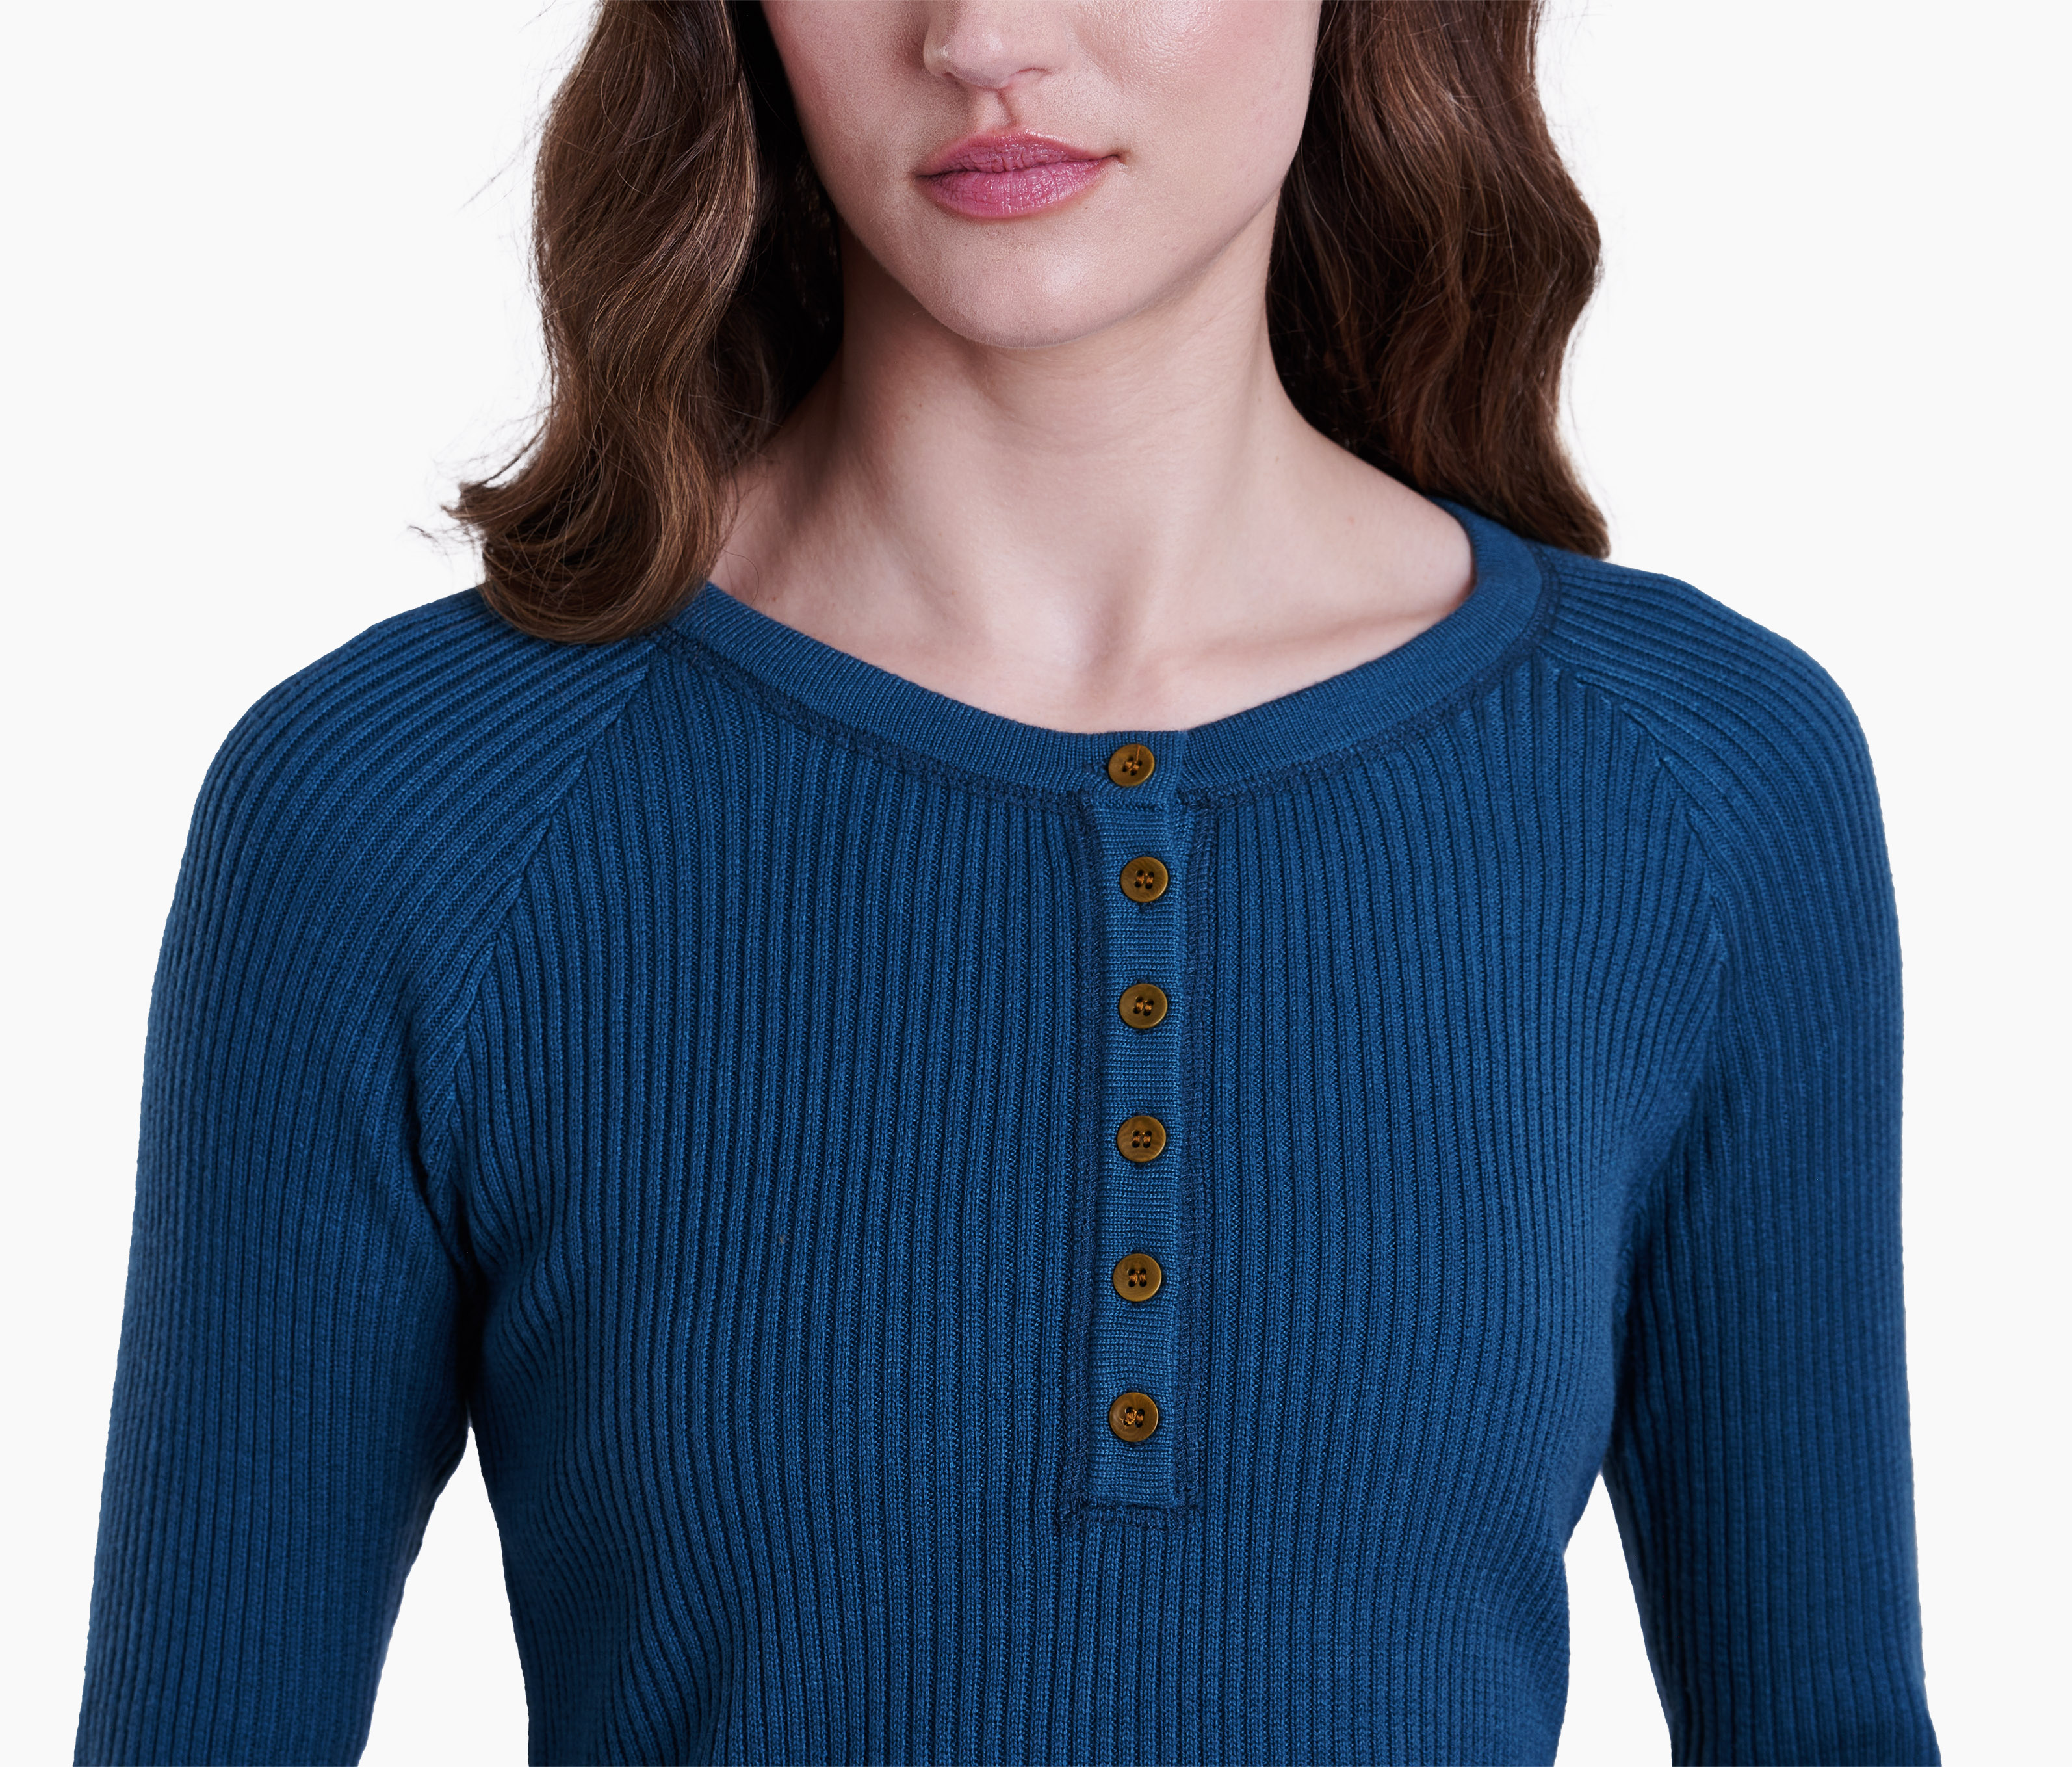 Kuhl sweater womens large - Gem